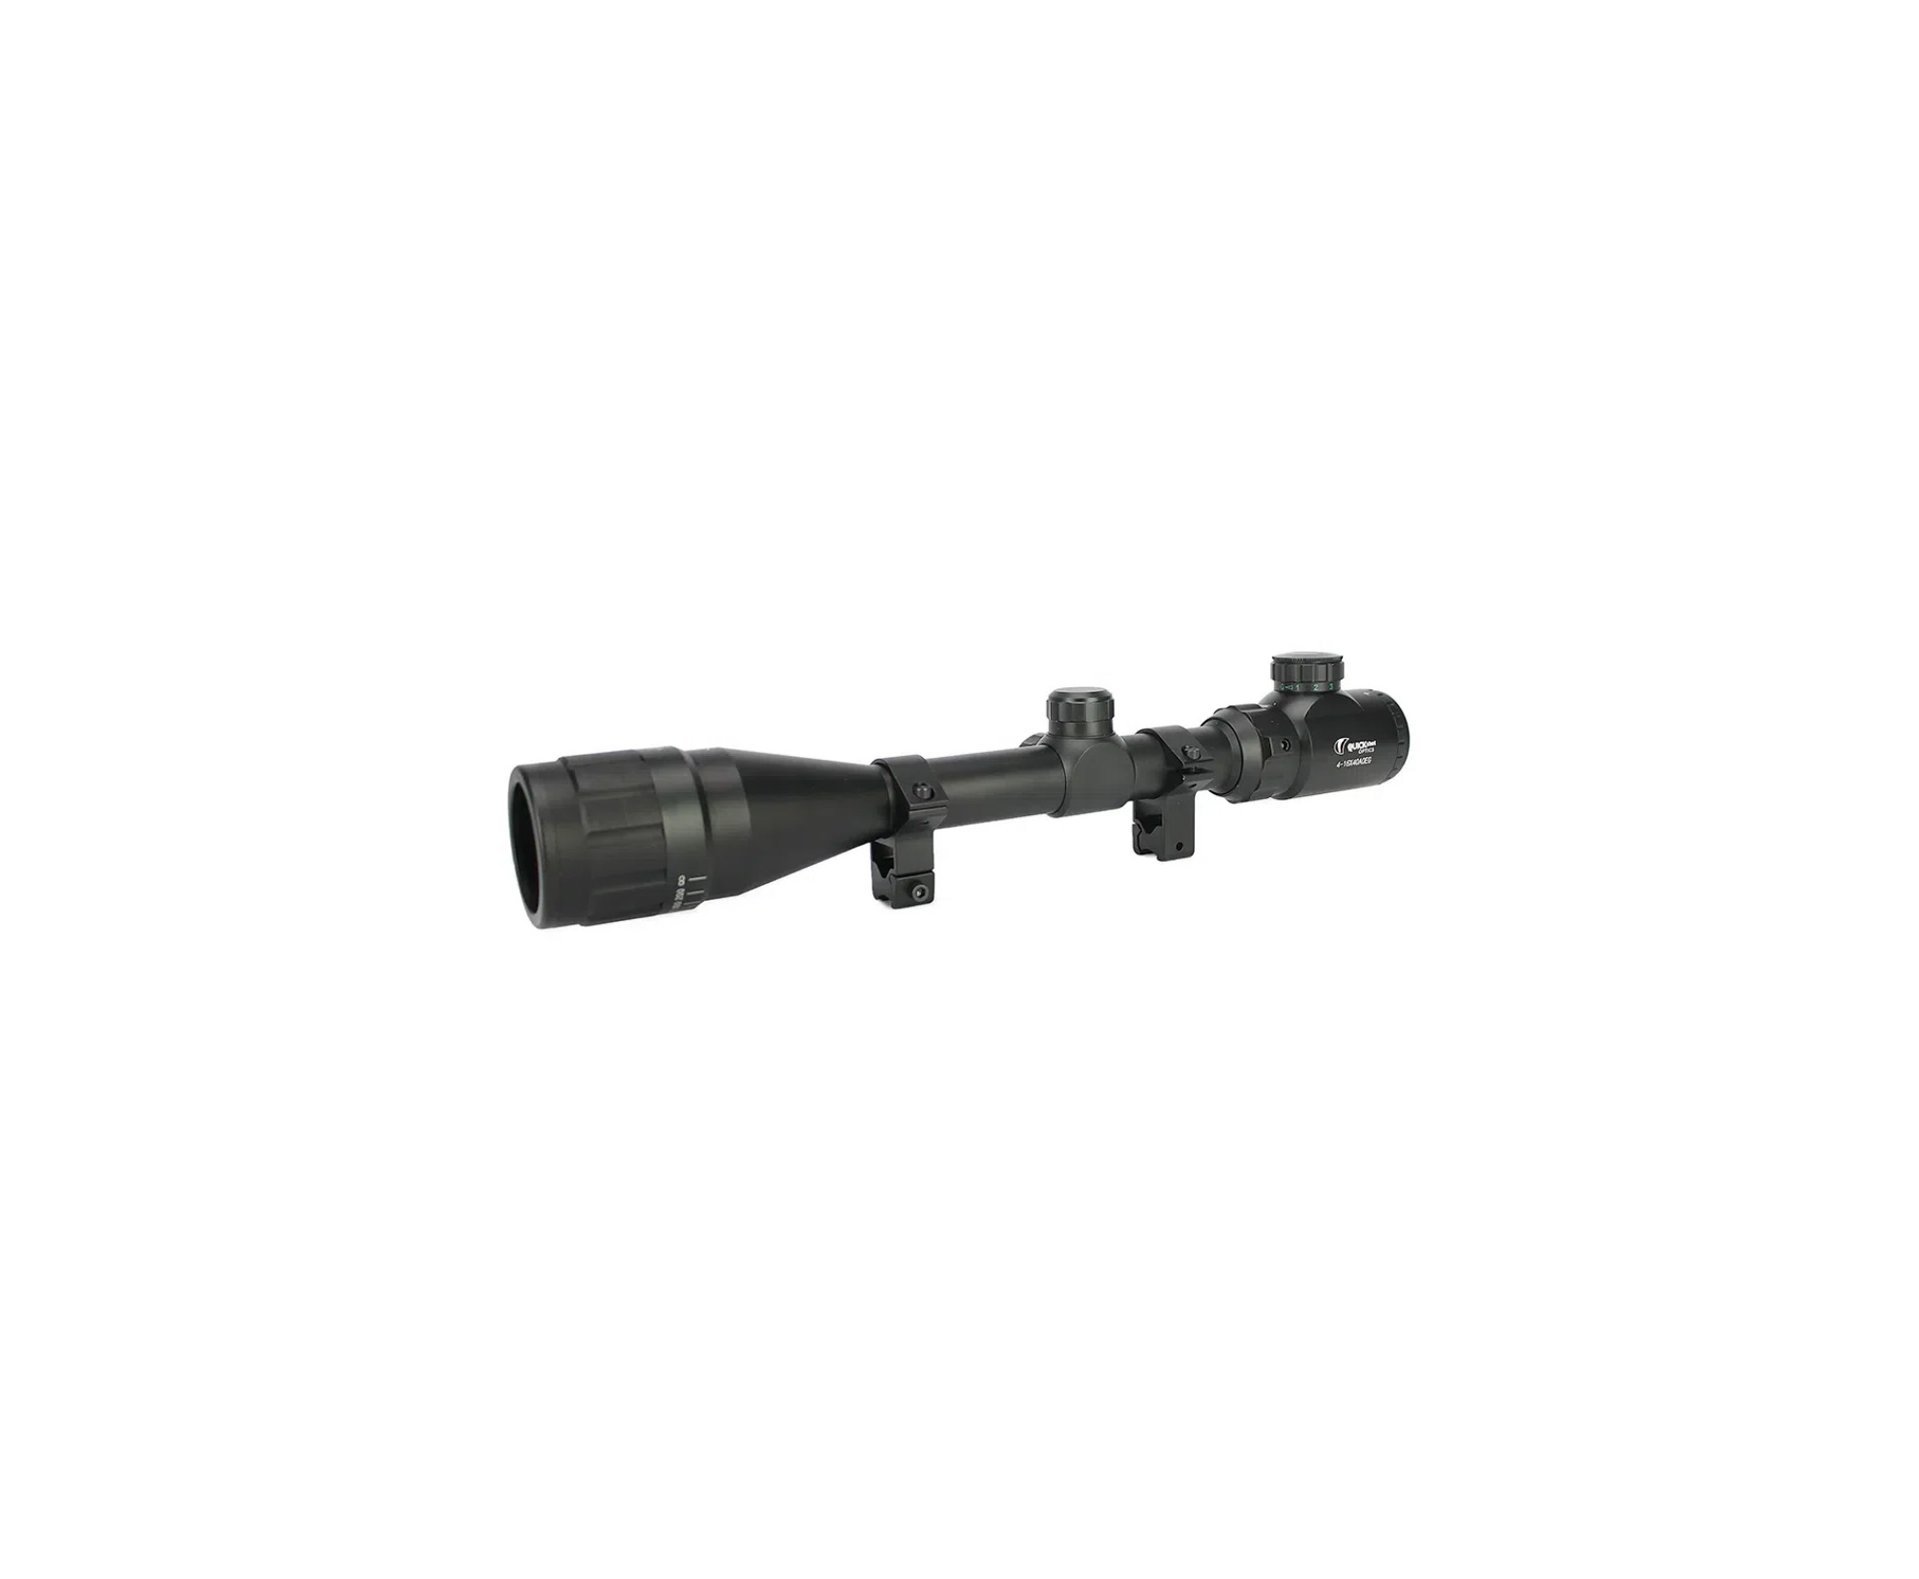 Carabina de Pressão PCP Beeman Raider 1331 Madeira 5.5mm - Rossi + Bomba + Luneta 4-16x40